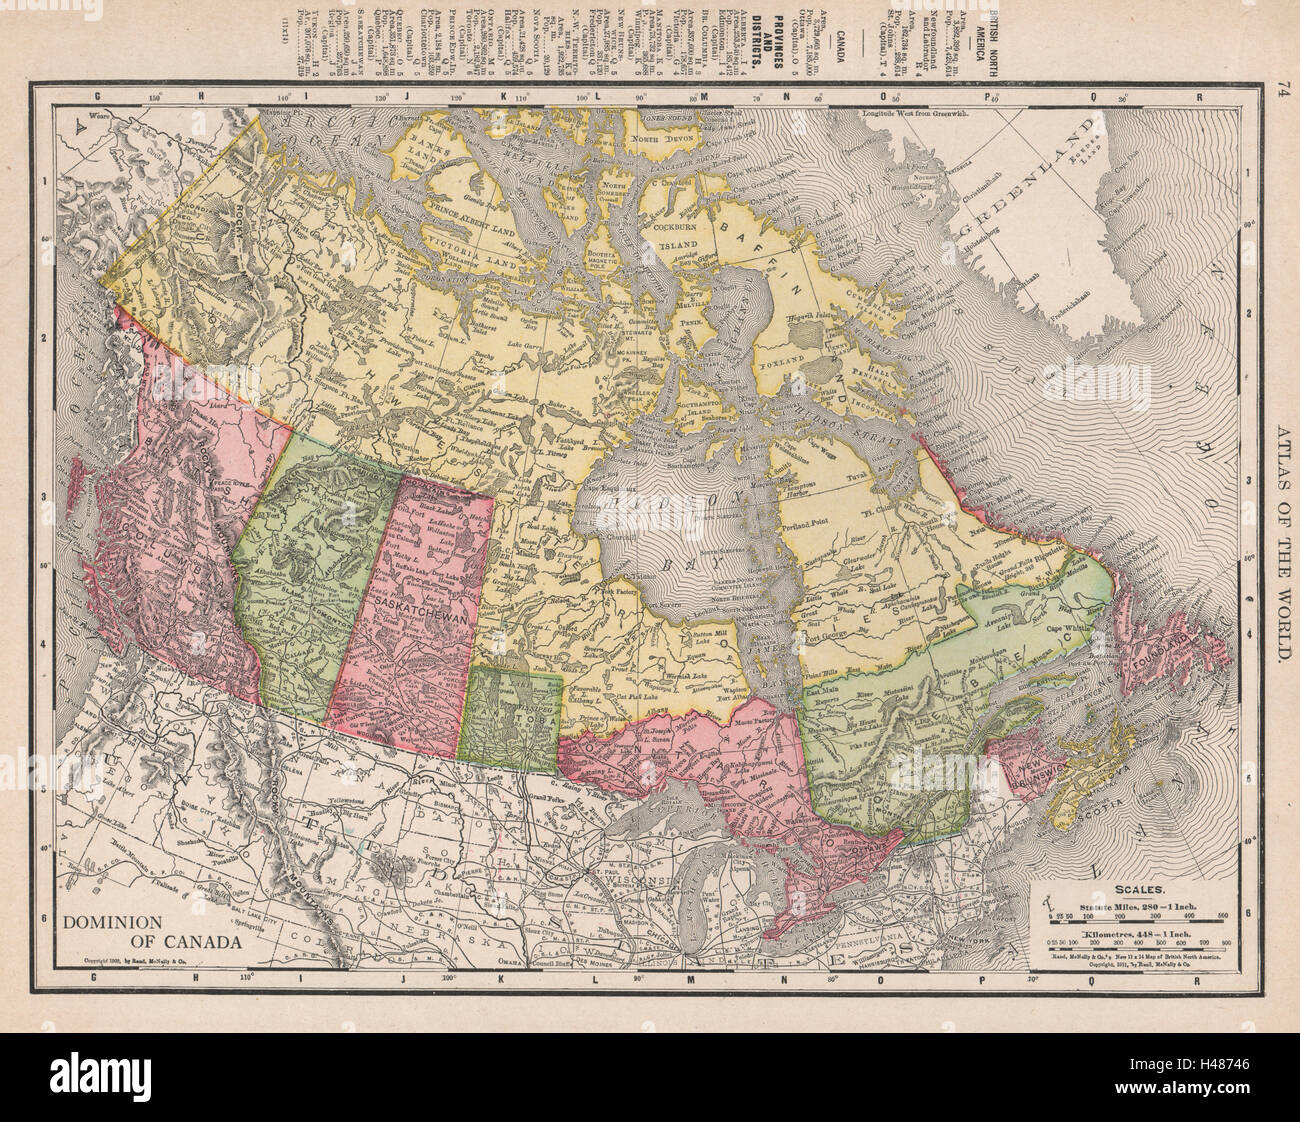 Dominion of Canada. Manitoba pre-1912 expansion. RAND MCNALLY 1912 old map Stock Photo